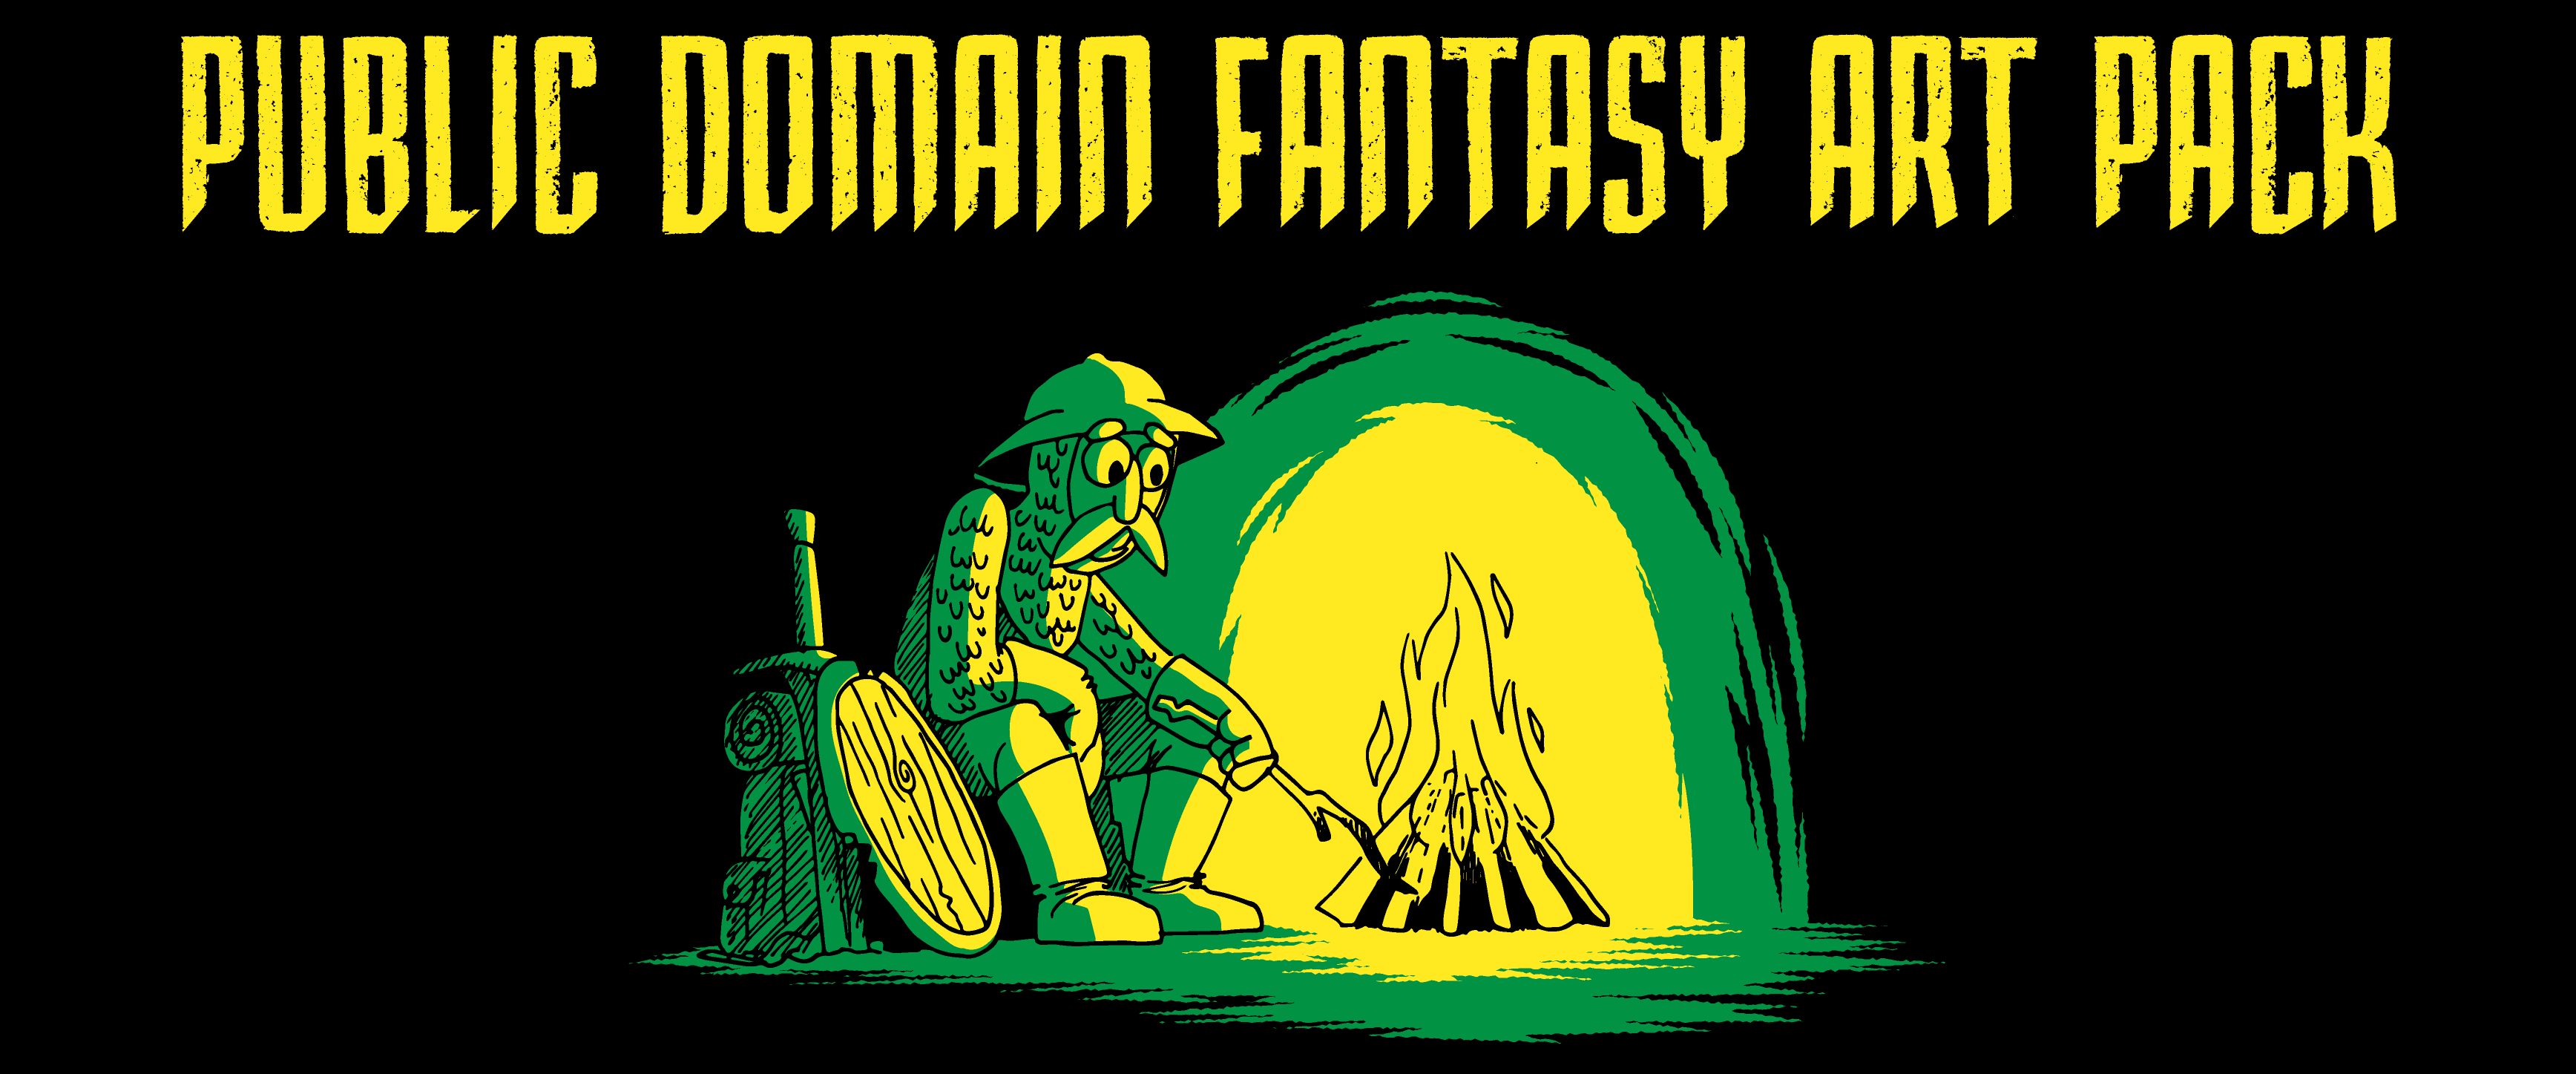 Public Domain Fantasy Art Pack